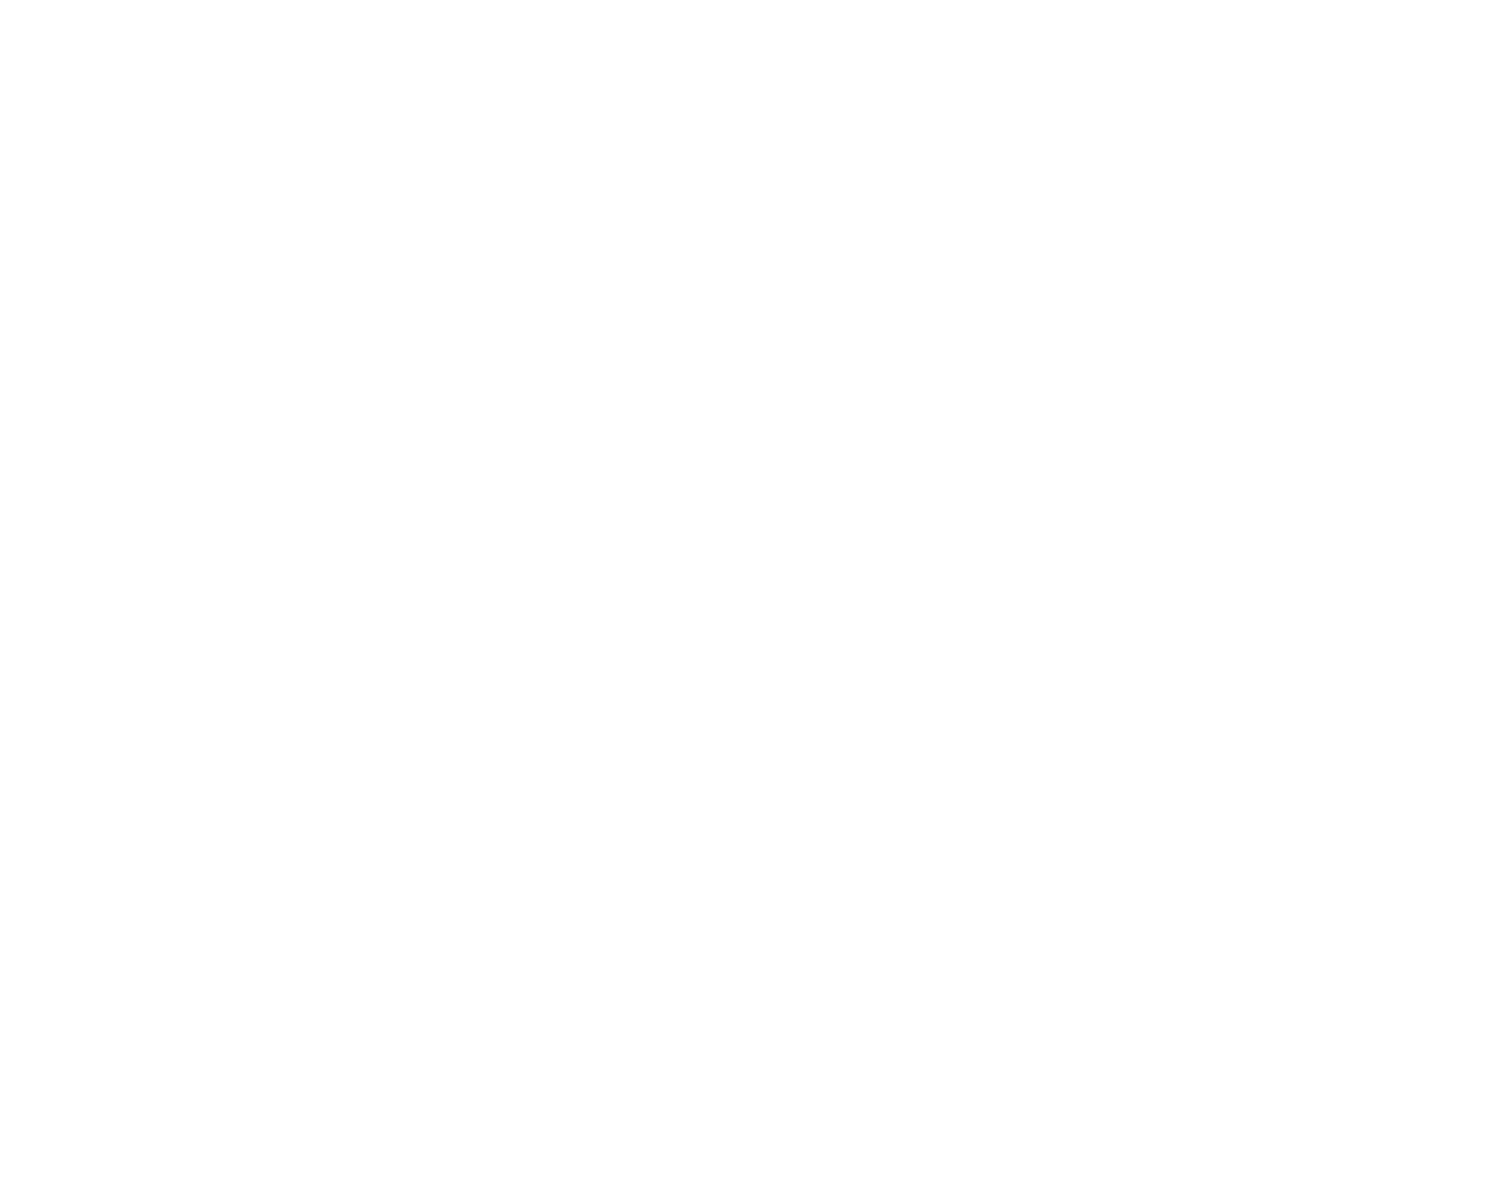 Cascara Coffee Company, LLC